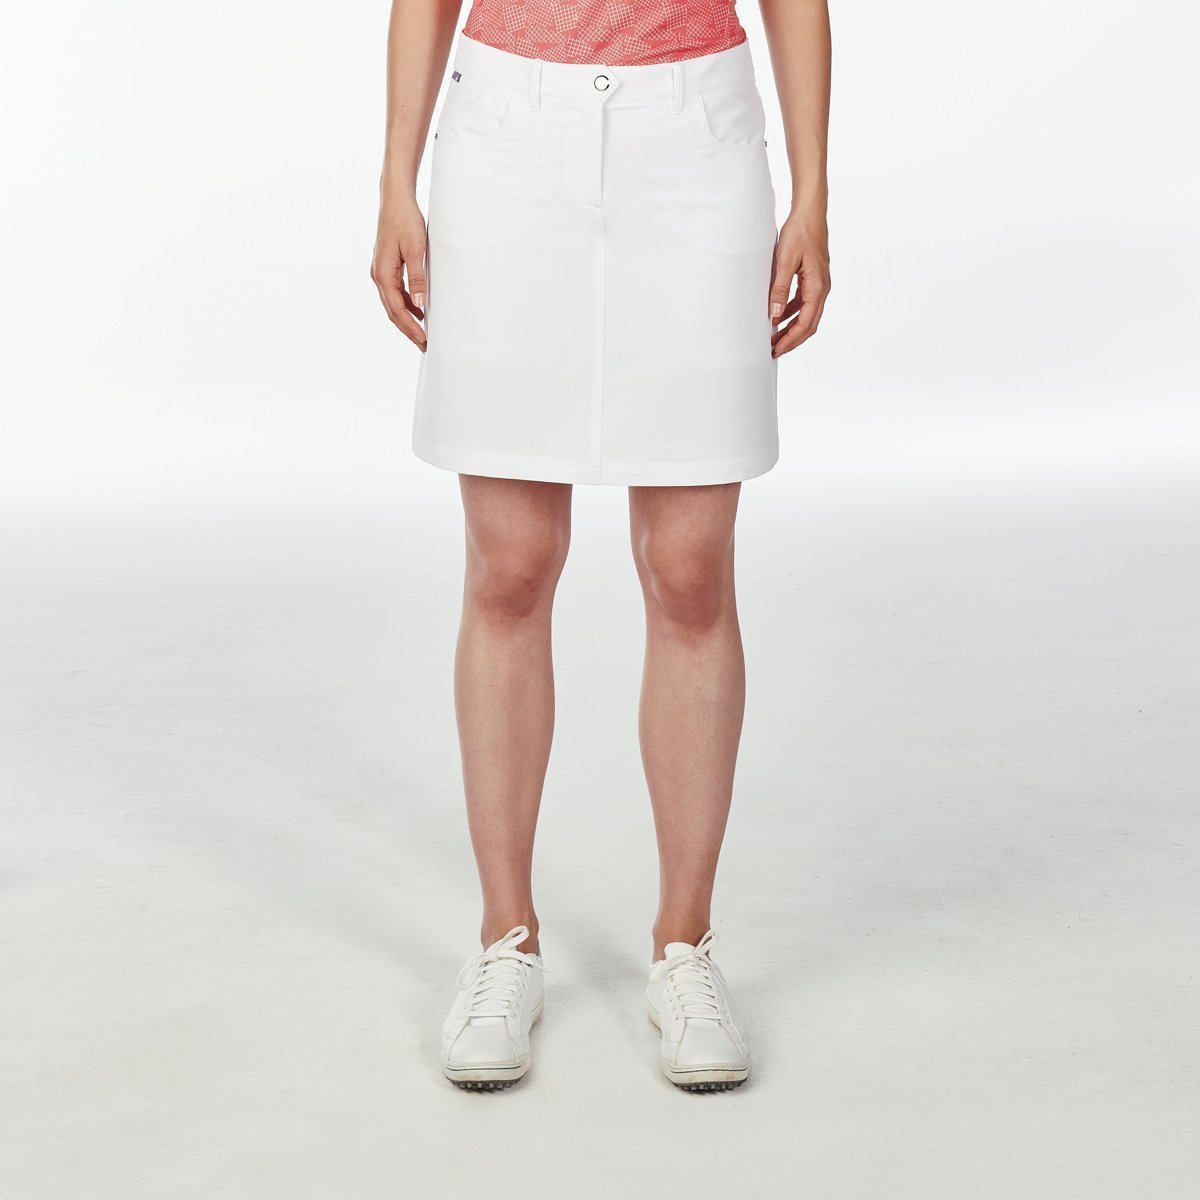 Skirt / Dress Nivo Marika Womens Skort White L